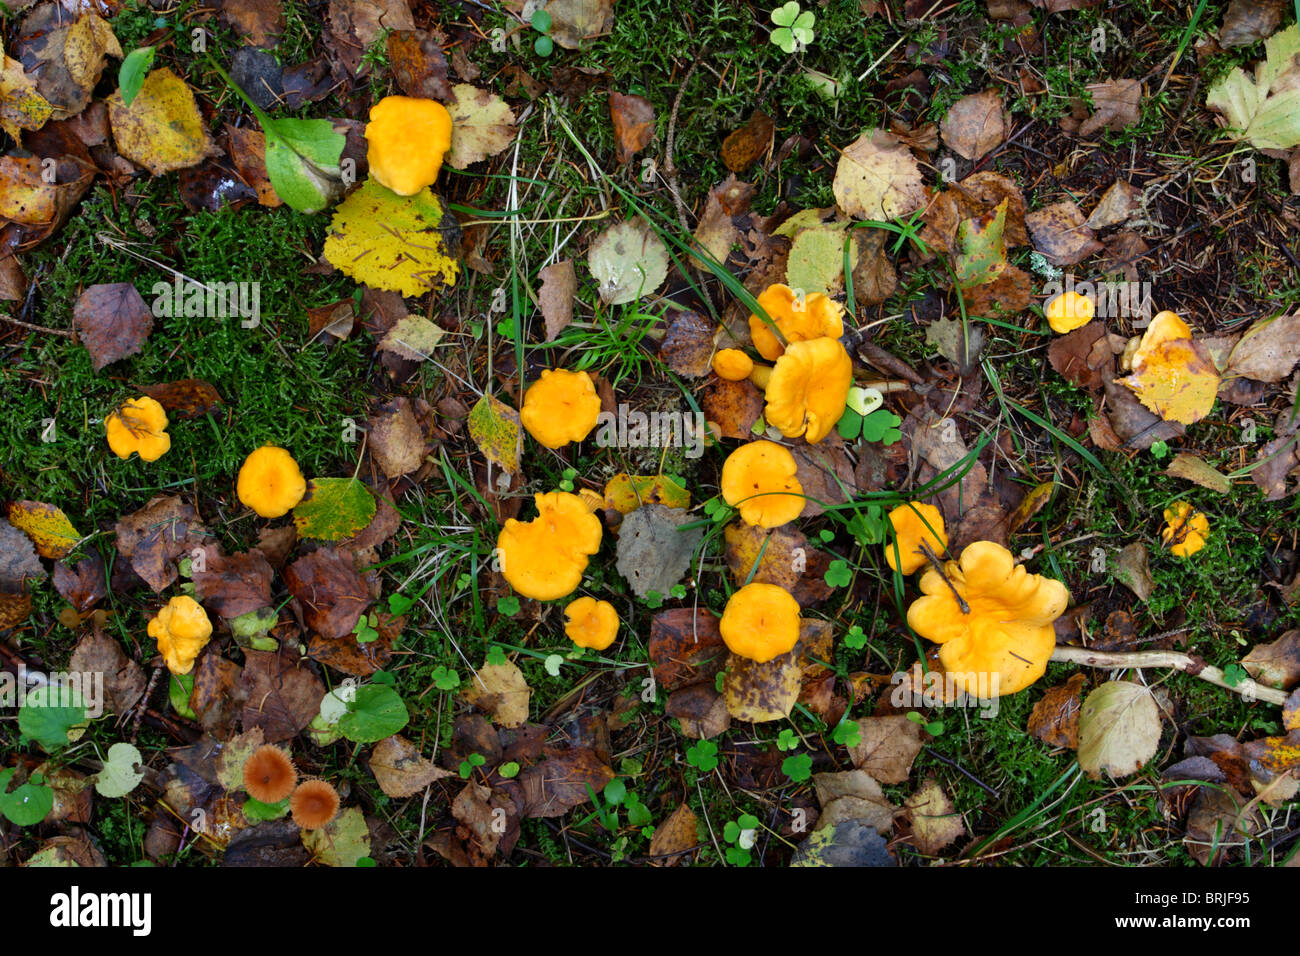 Yellow Chanterelle (Cantharellus cibarius) mushrooms growing on the ground. Europe, autumn. Stock Photo